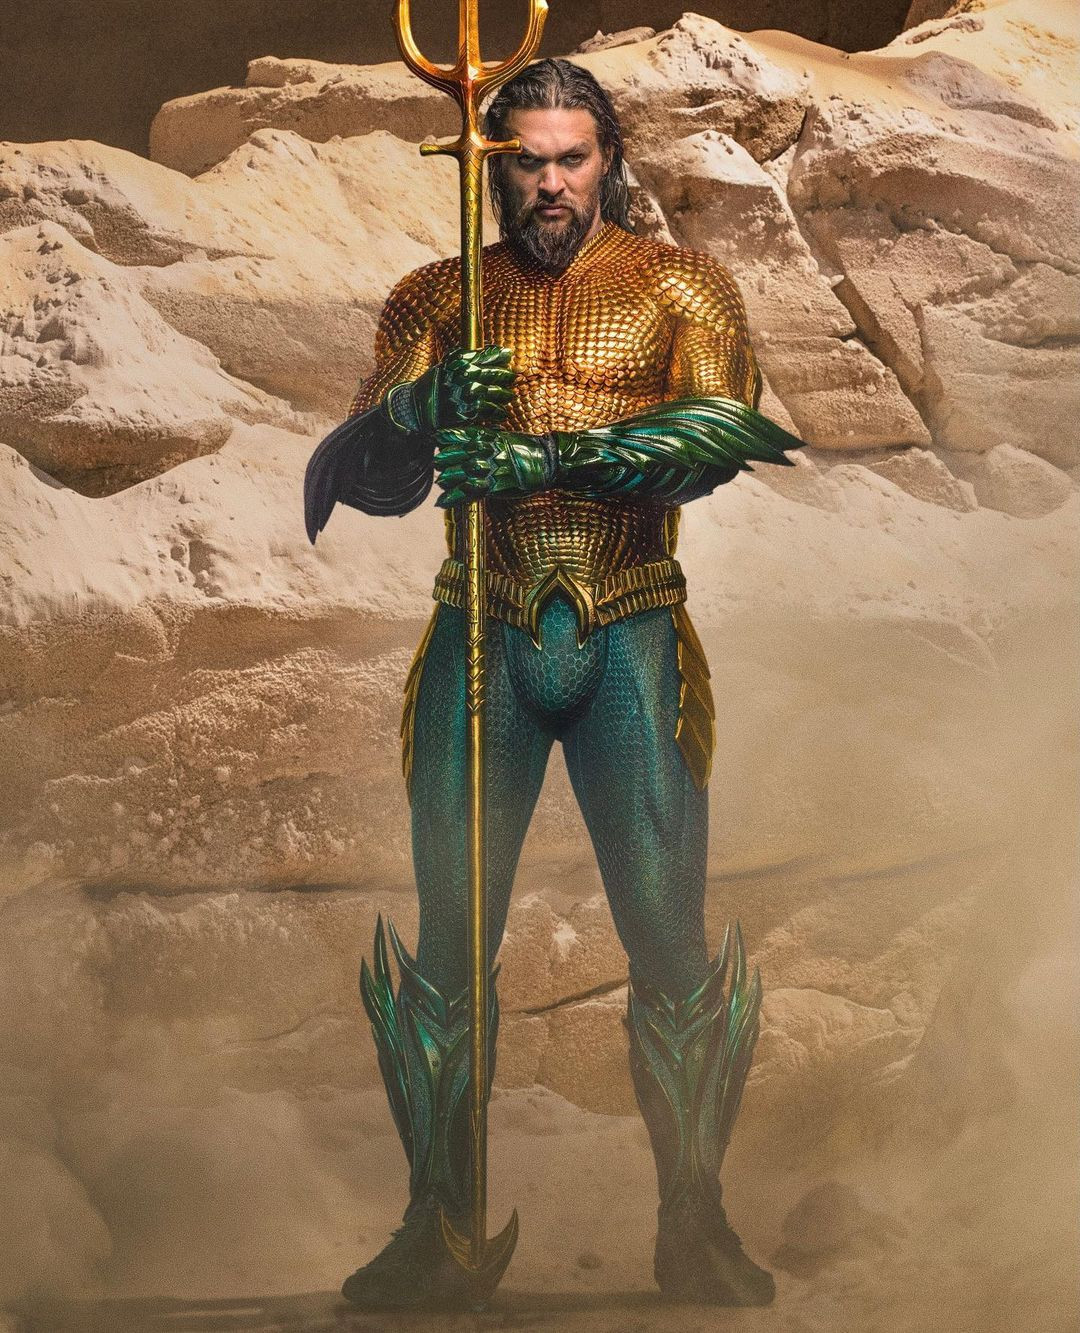 Aquaman Jason Momoa